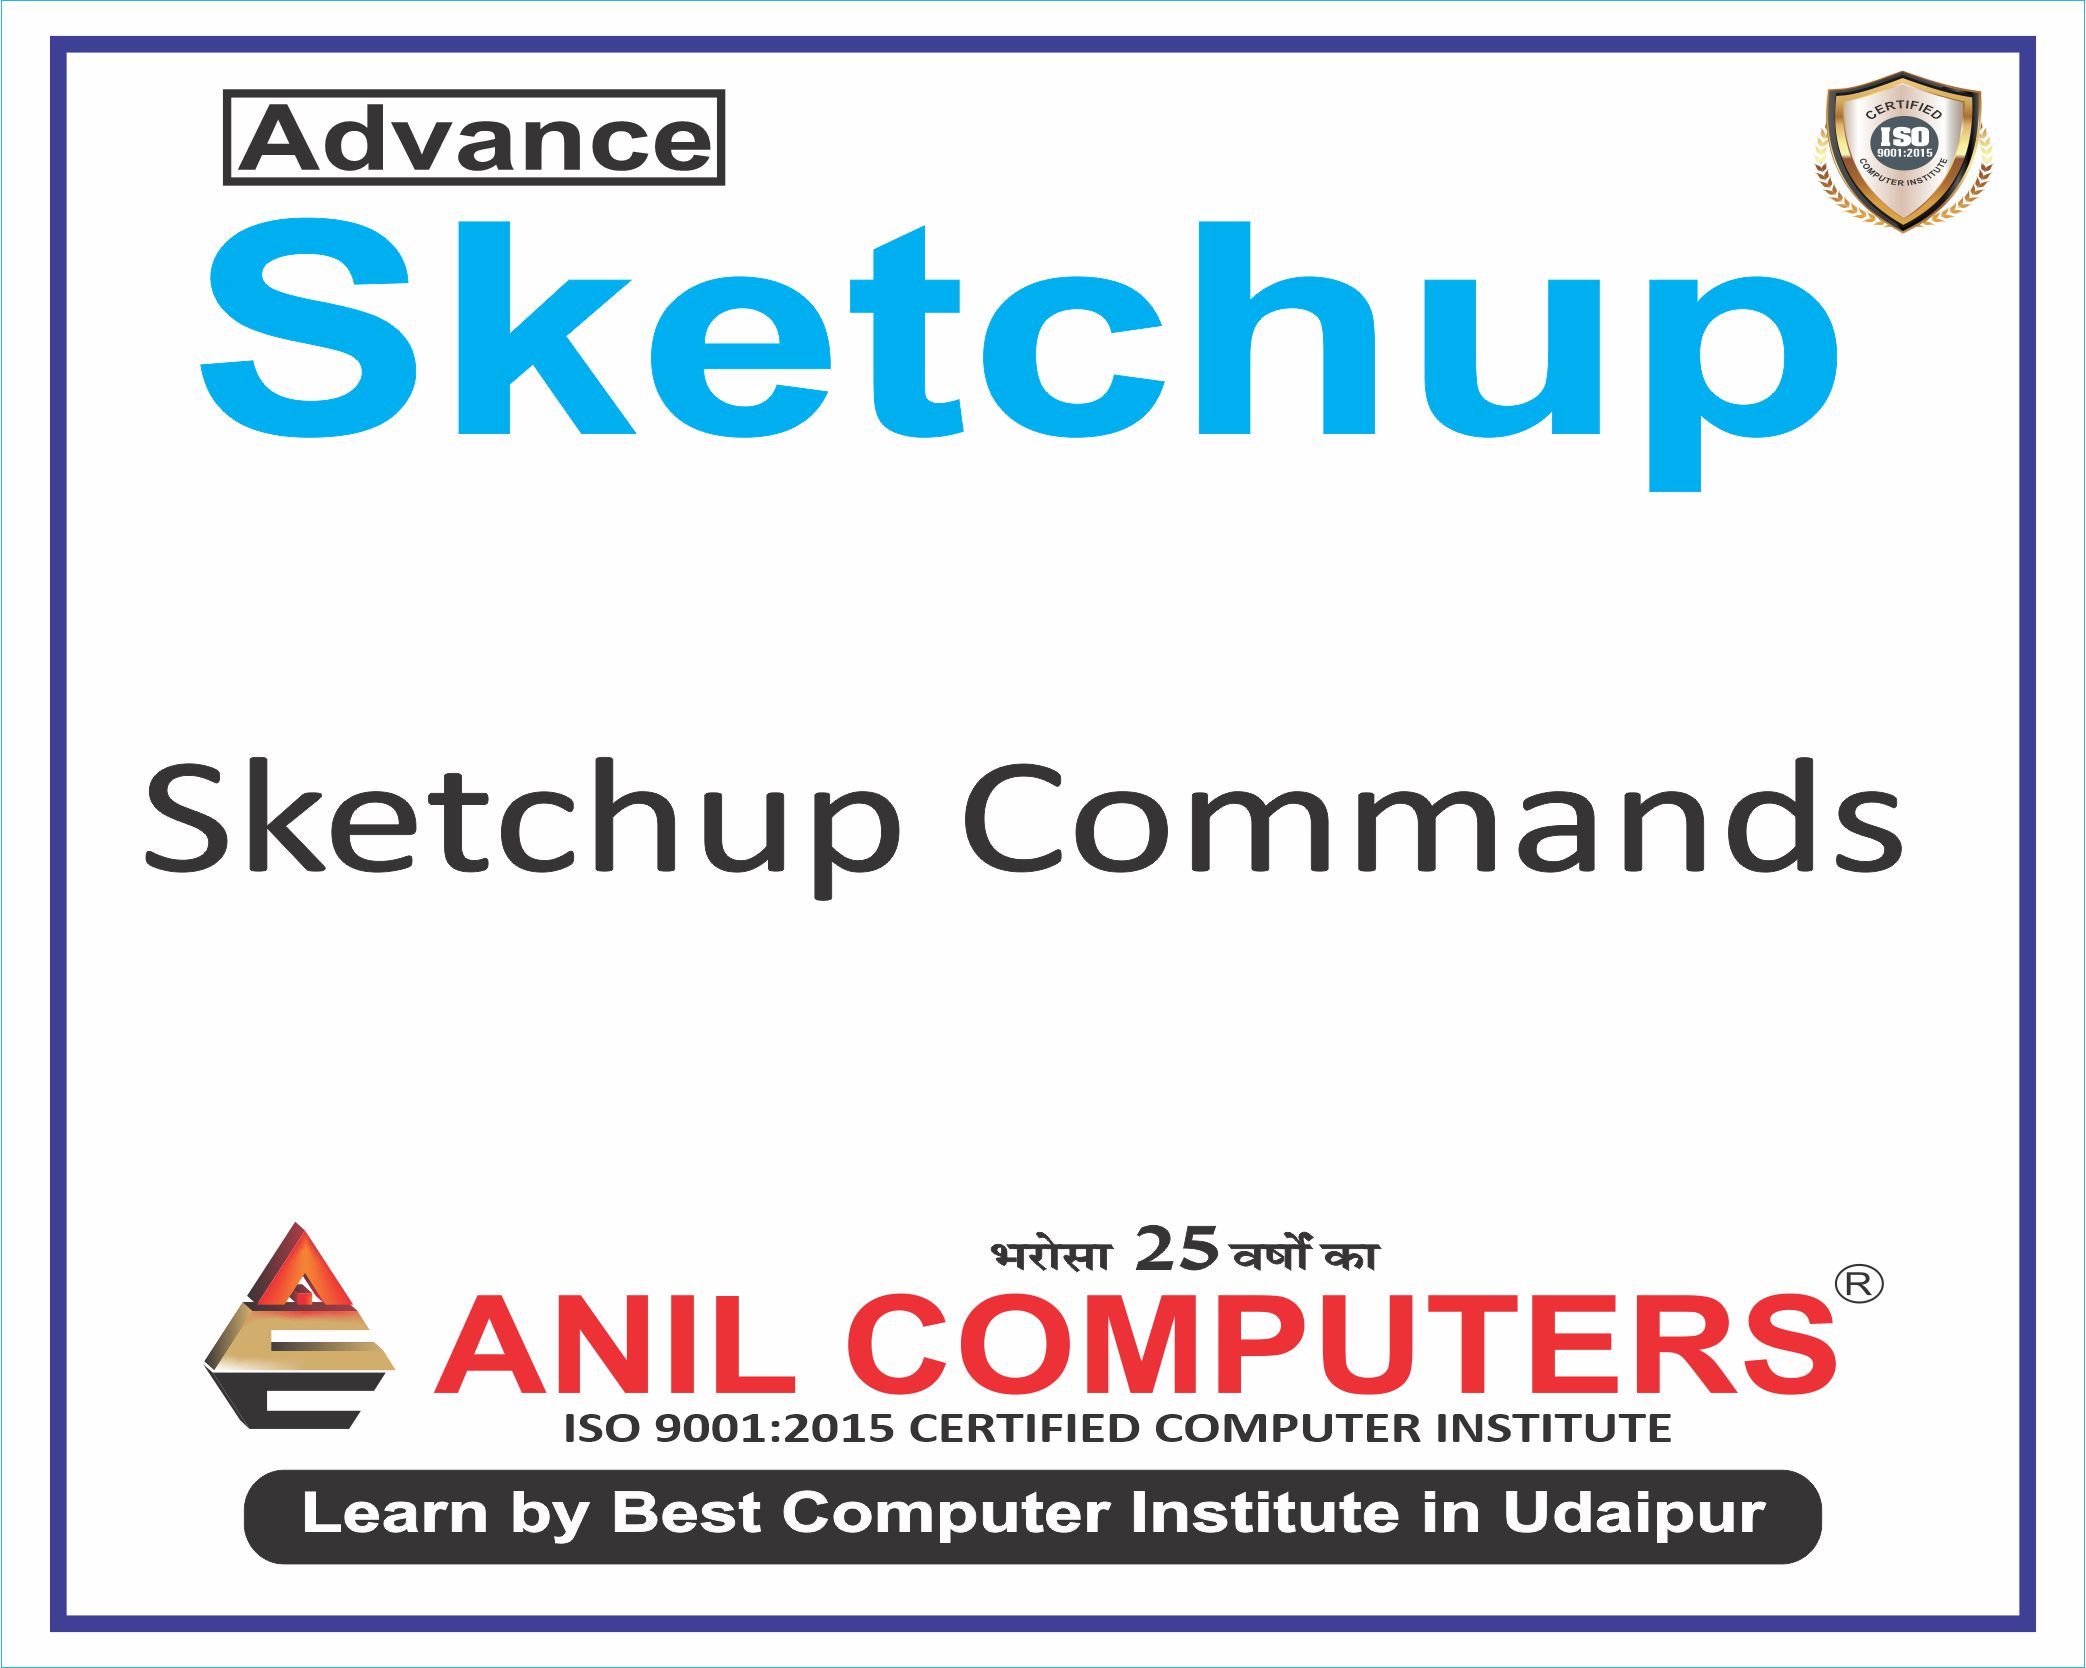 Sketchup Commands